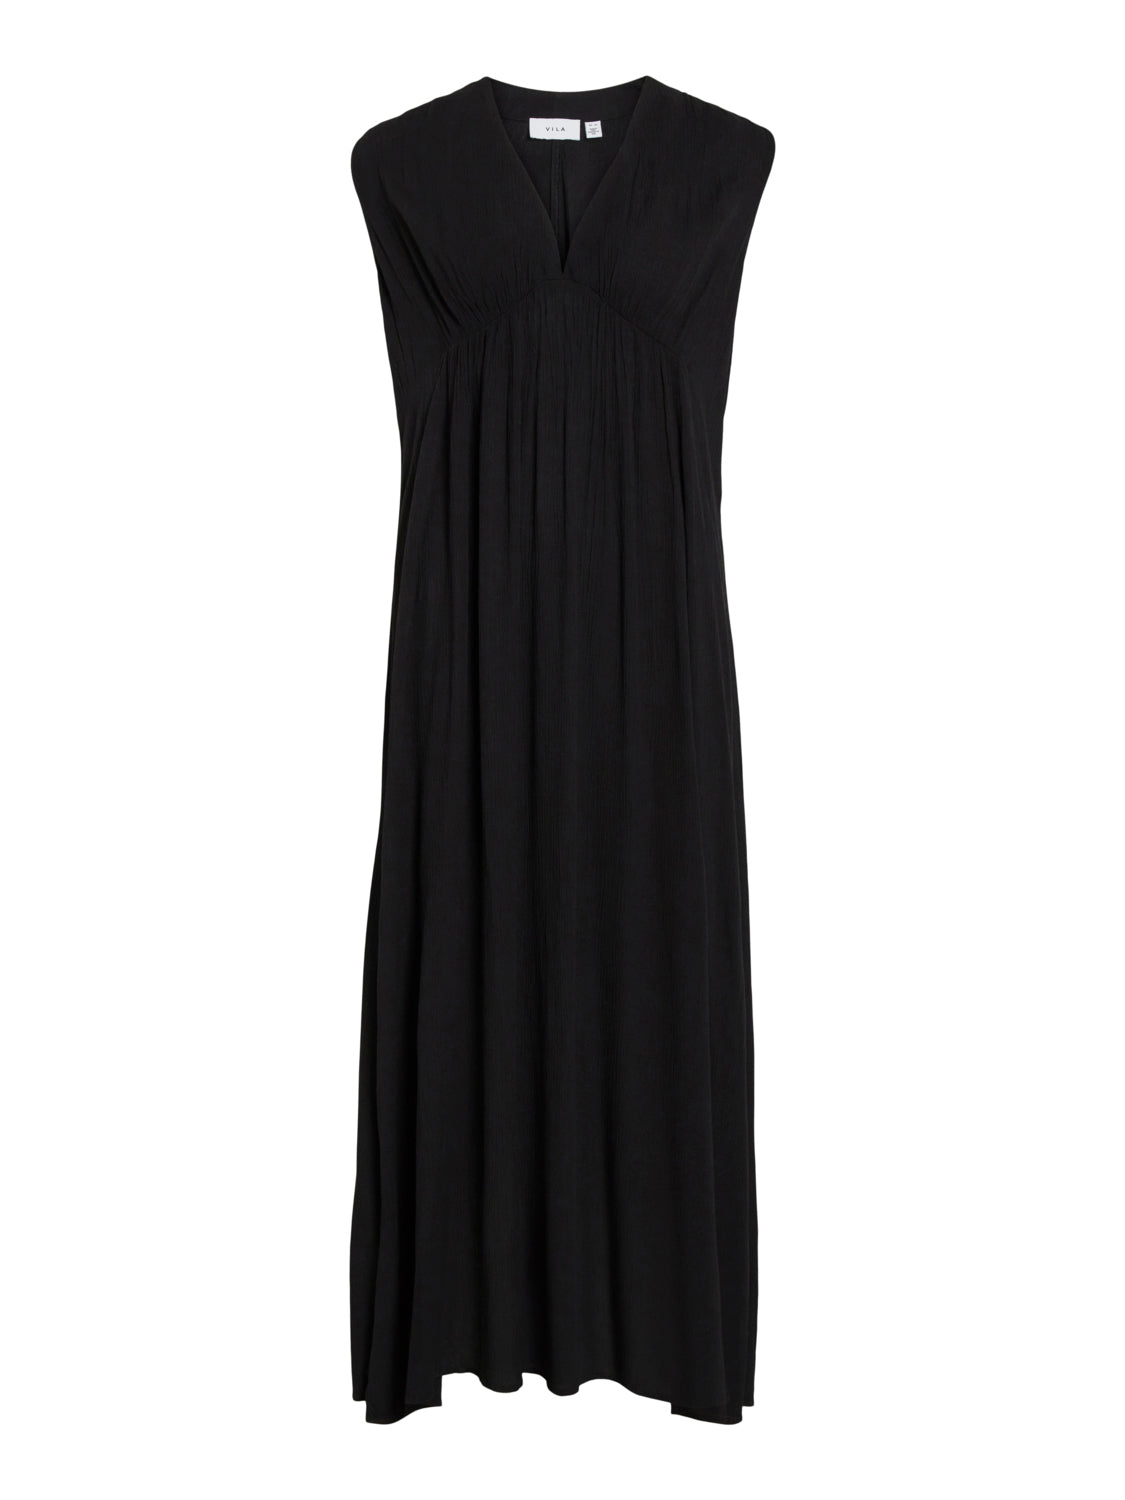 VISIMONES Dress - Black